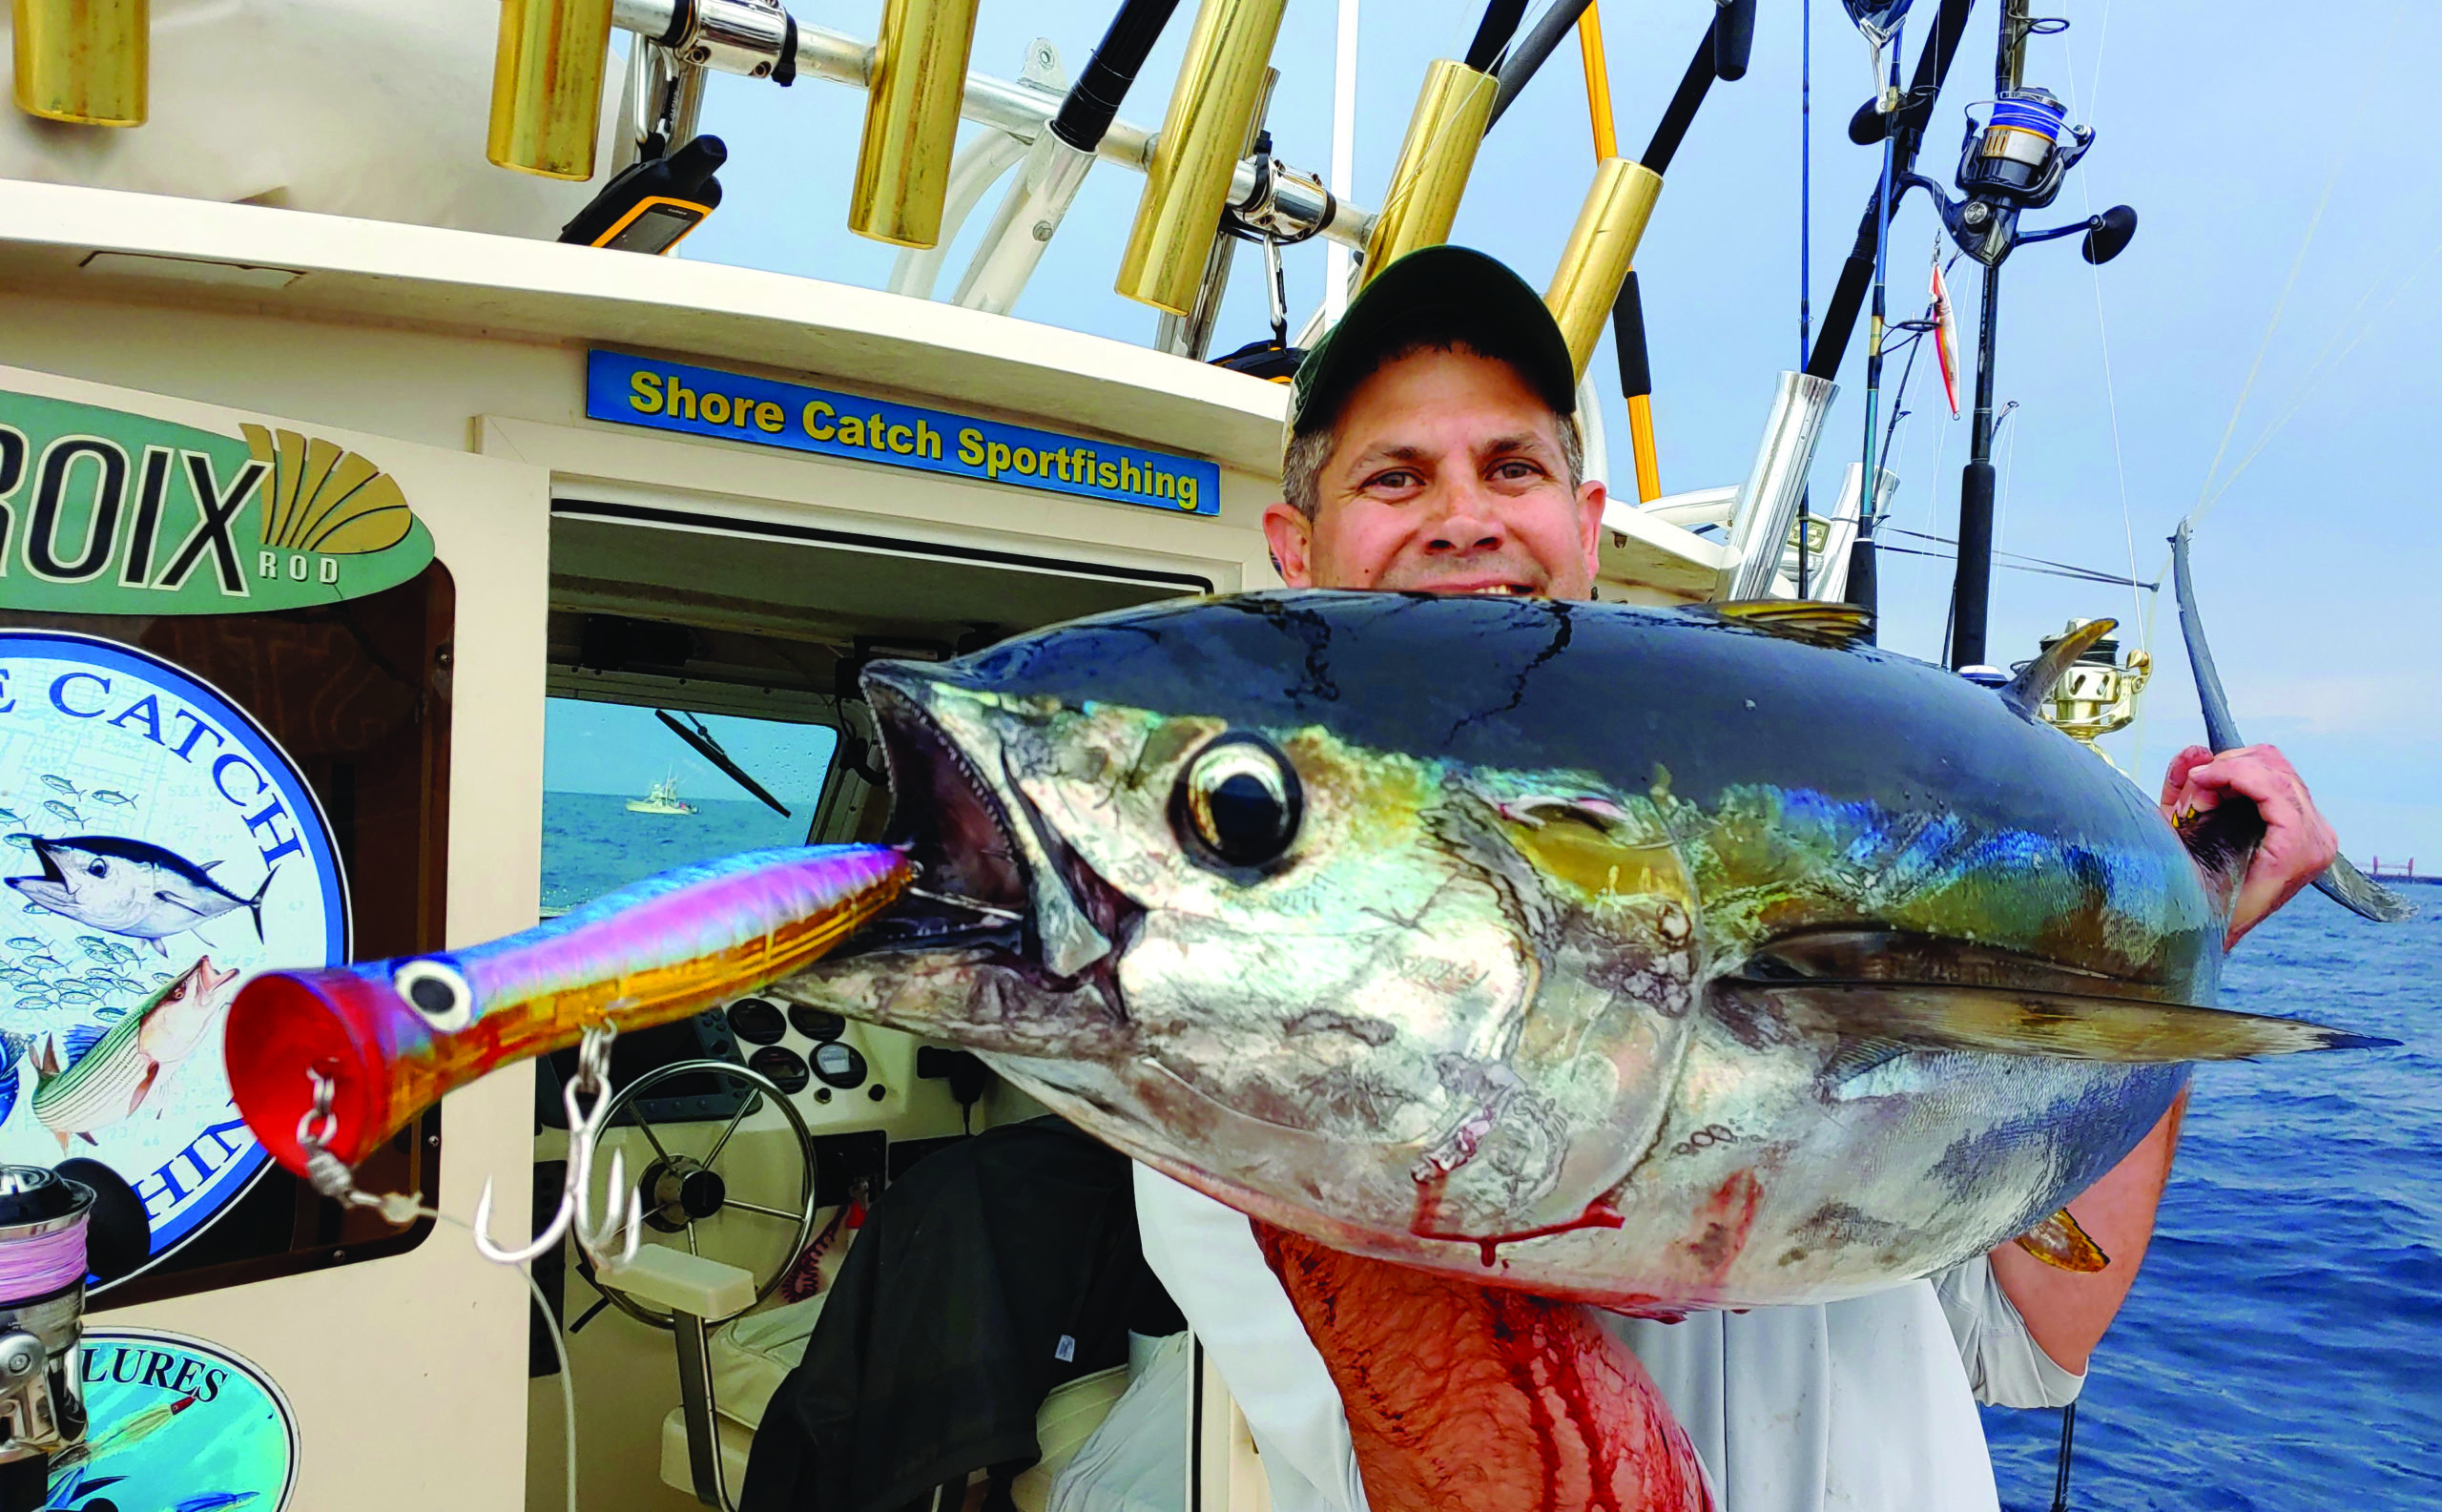 POPPIN' YELLOWFIN: THE HUNT FOR TOPWATER TUNA - The Fisherman